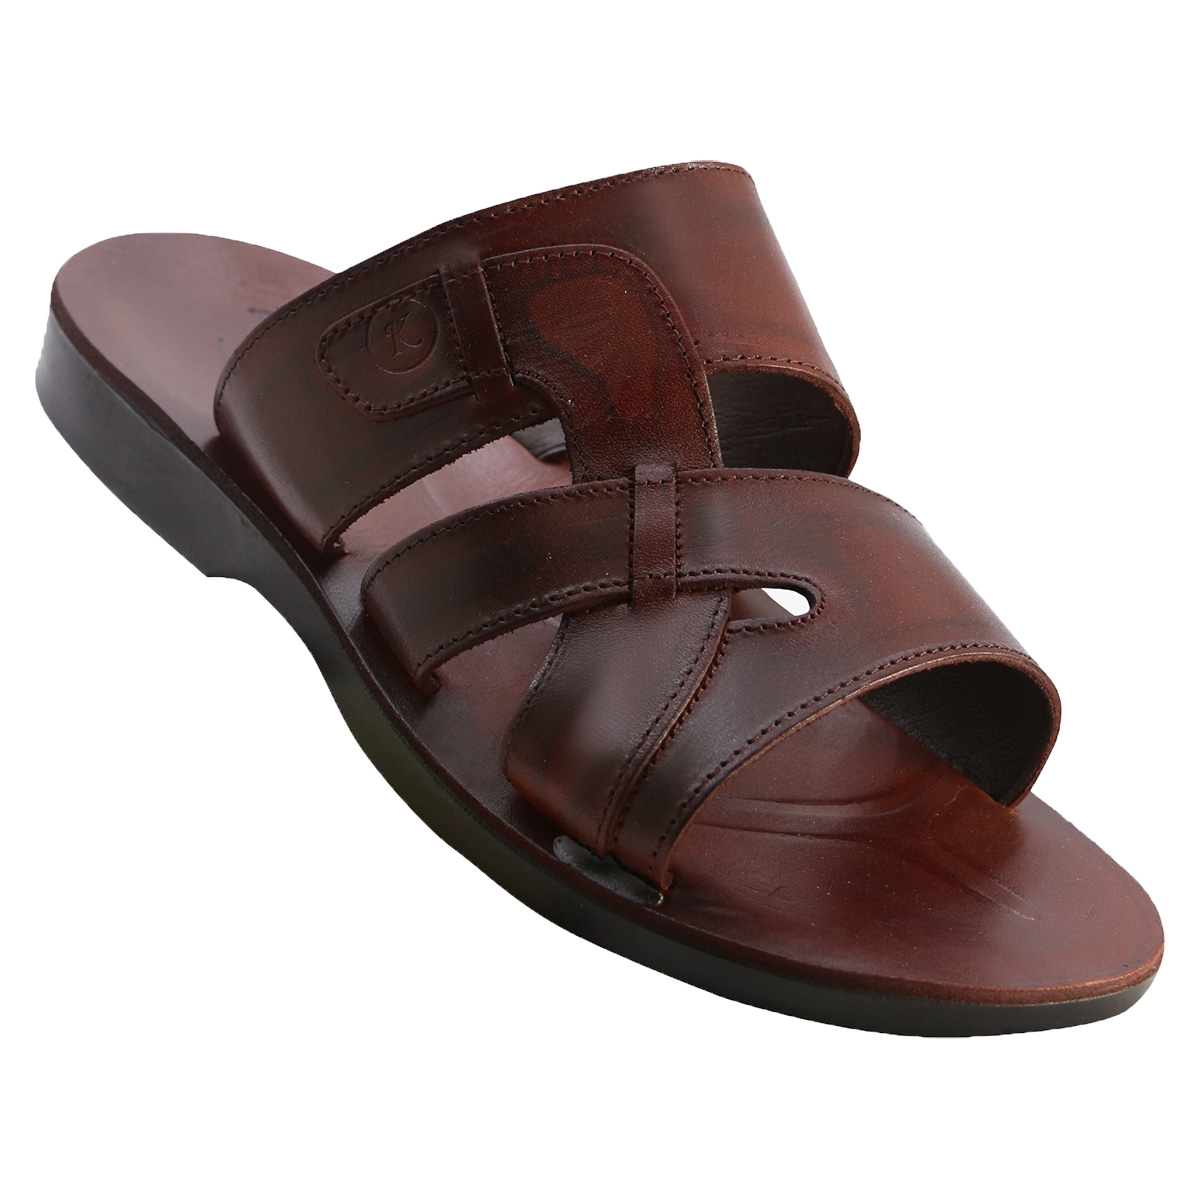 Tzur Handmade Leather Jesus Sandals - 1